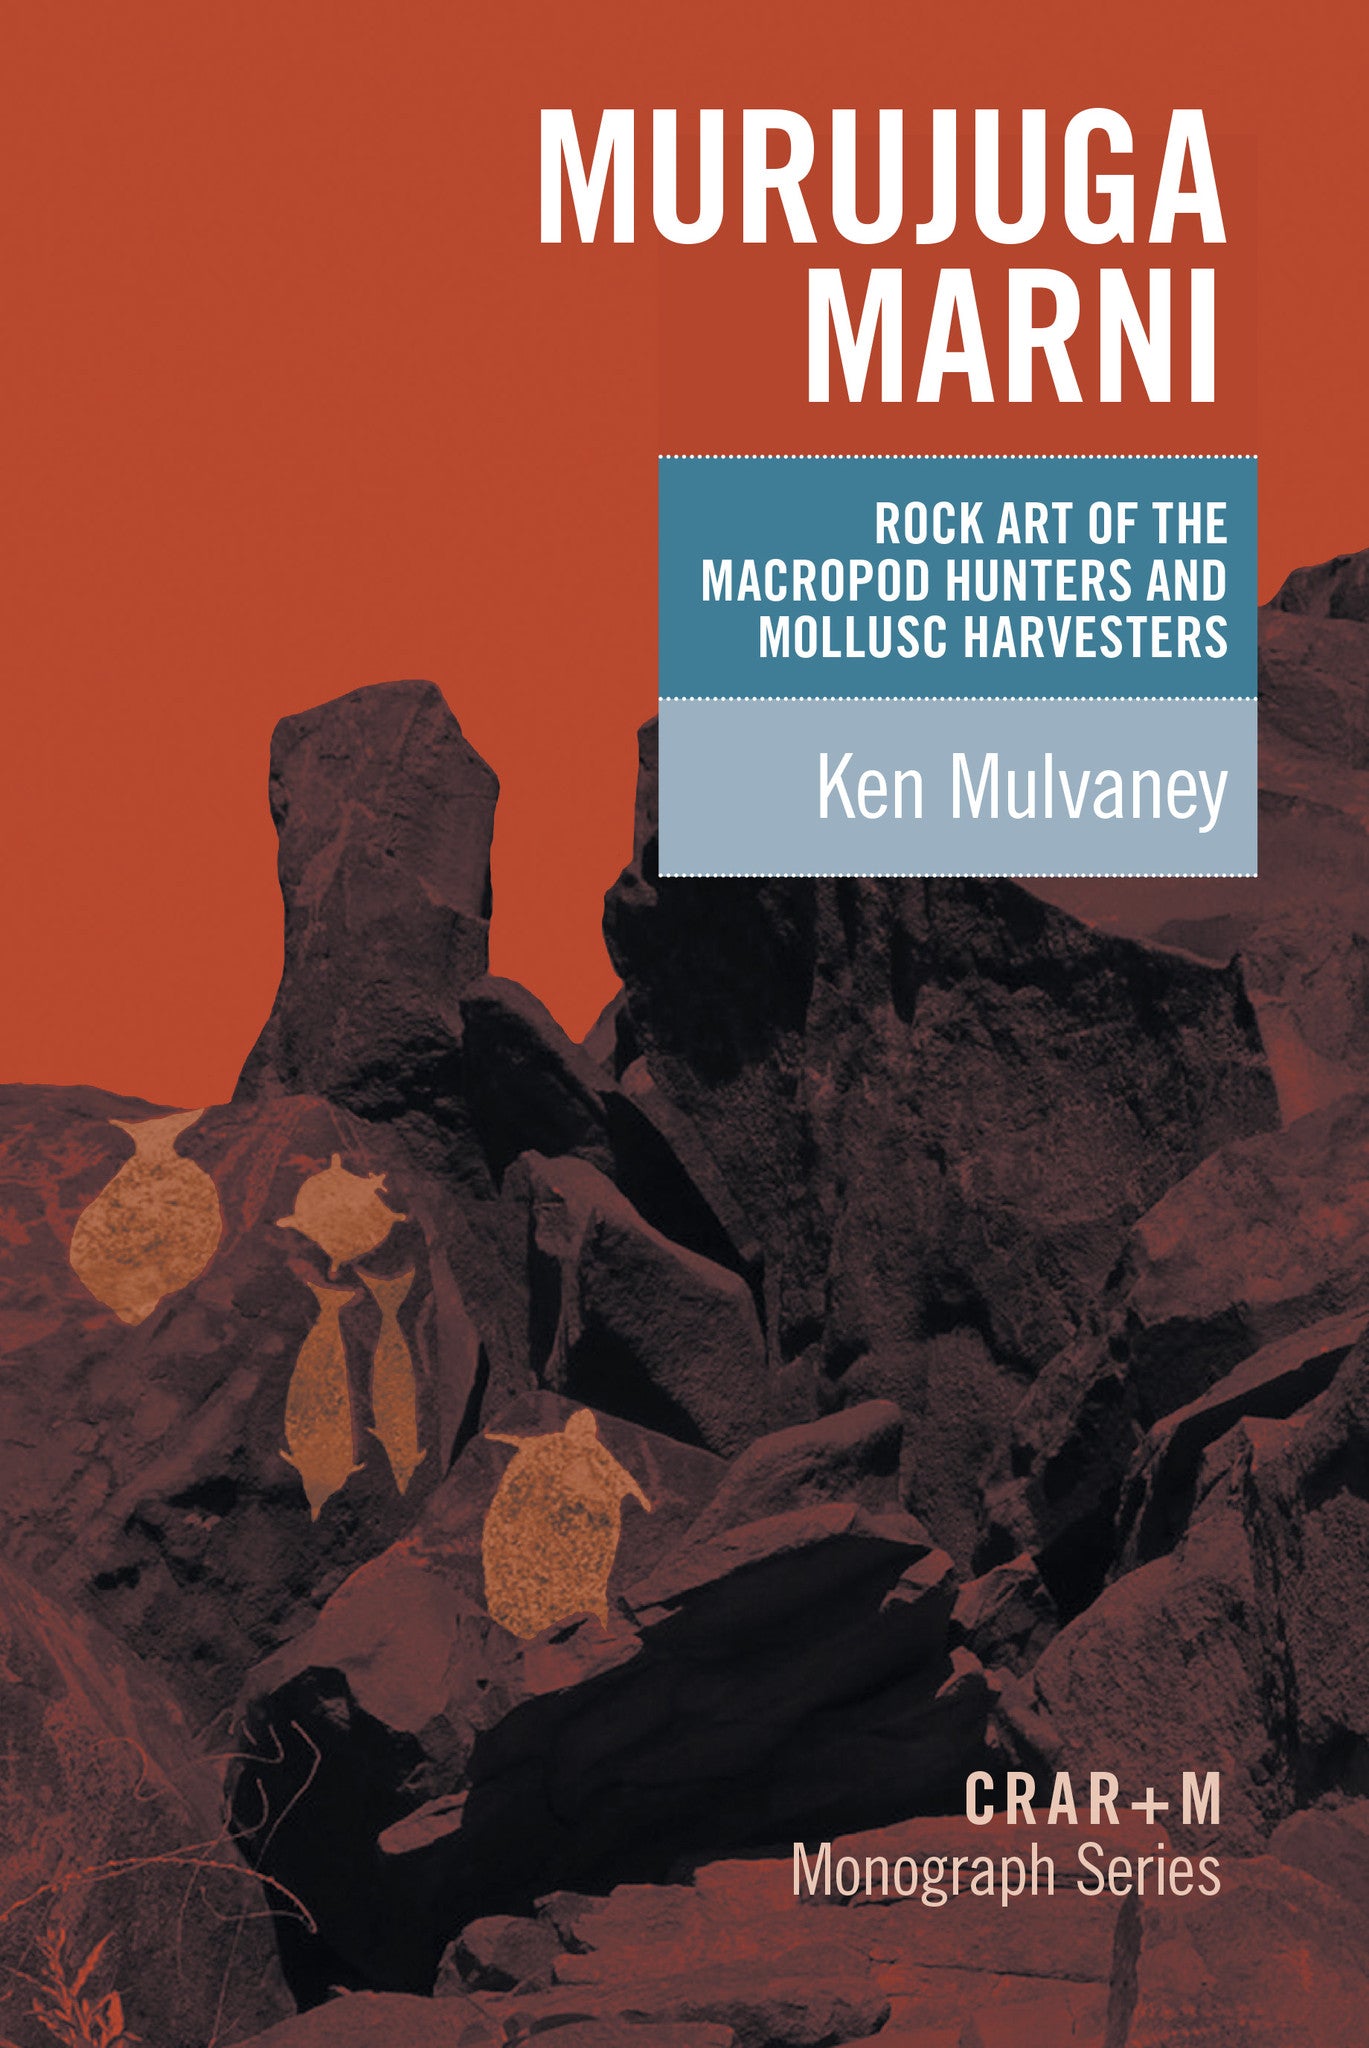 Murujuga Marni: rock art of the macropod hunters and mollusc harvesters